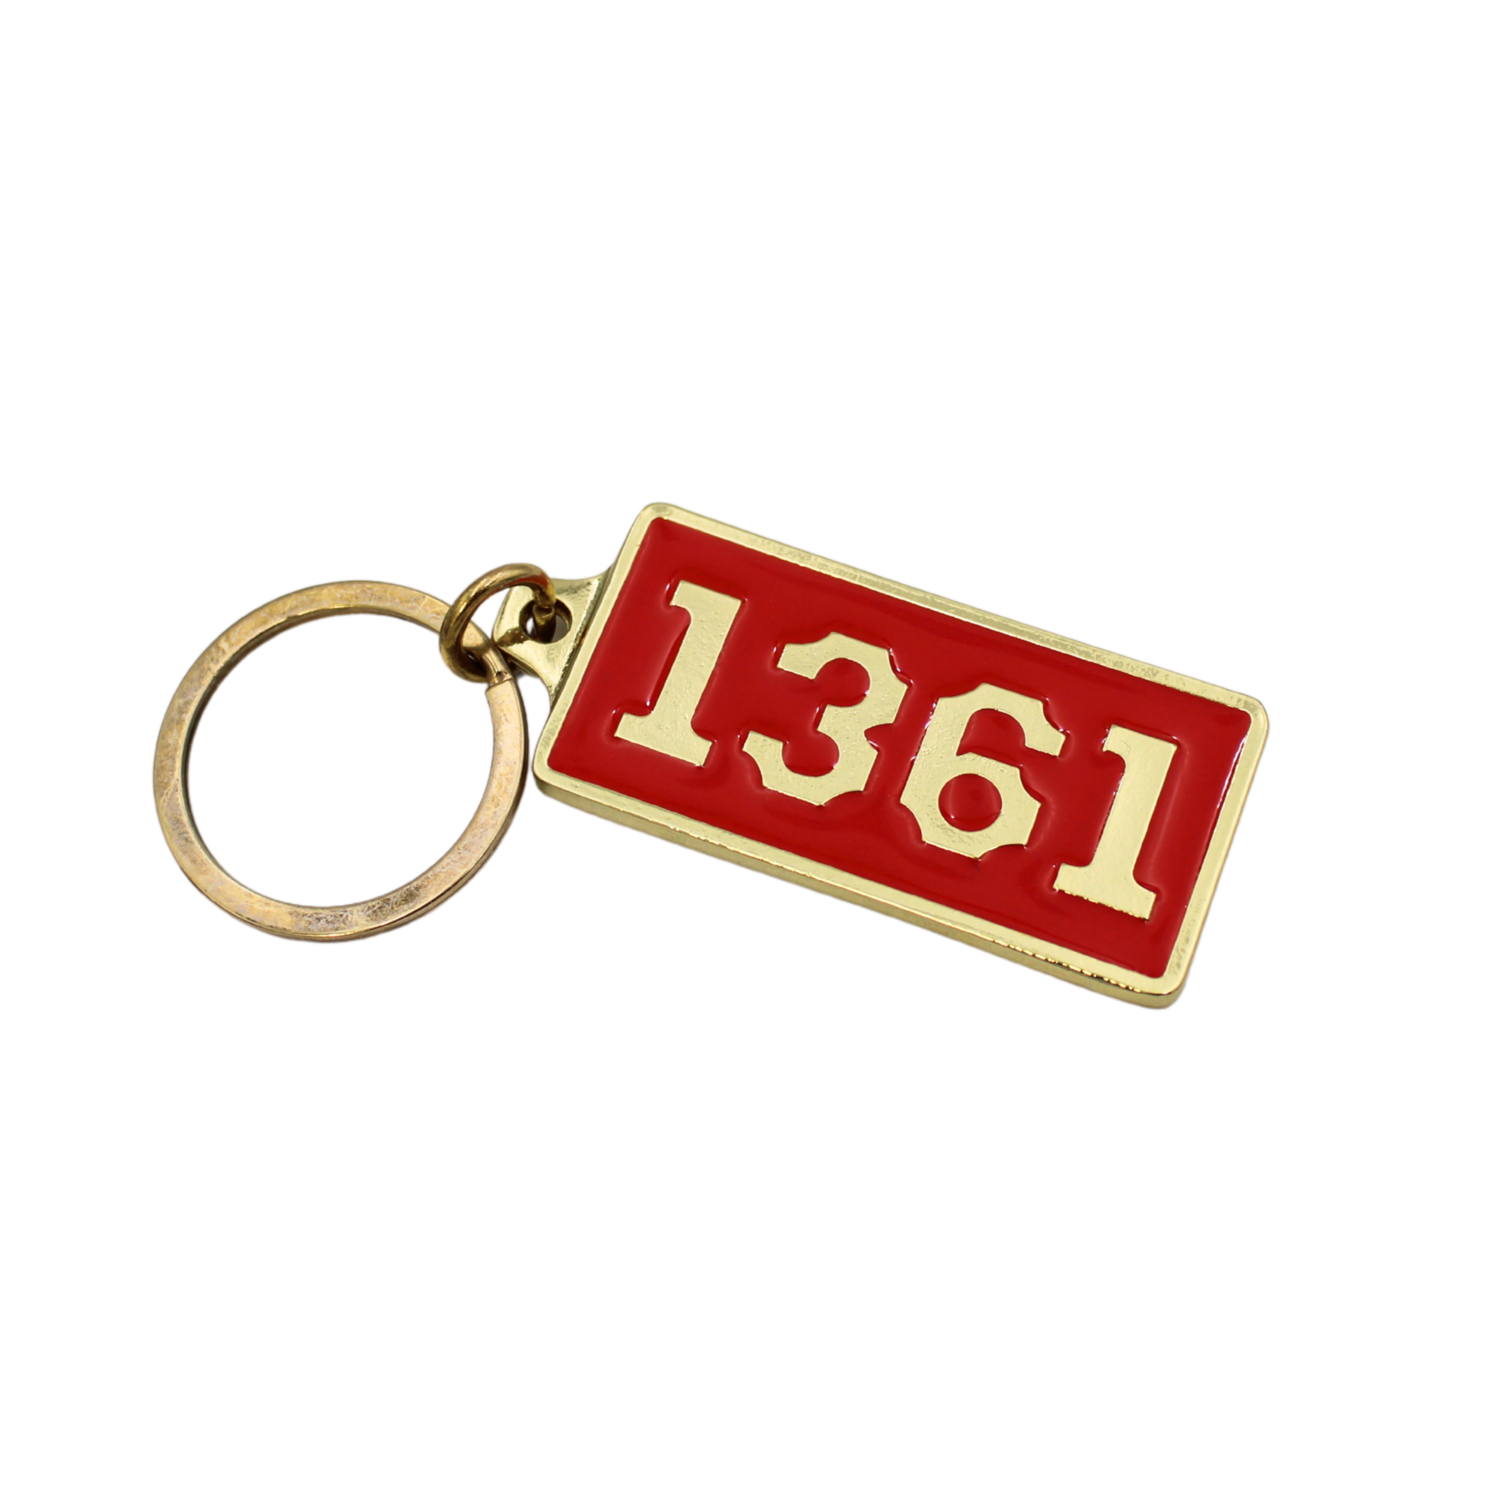 1361 Keychain